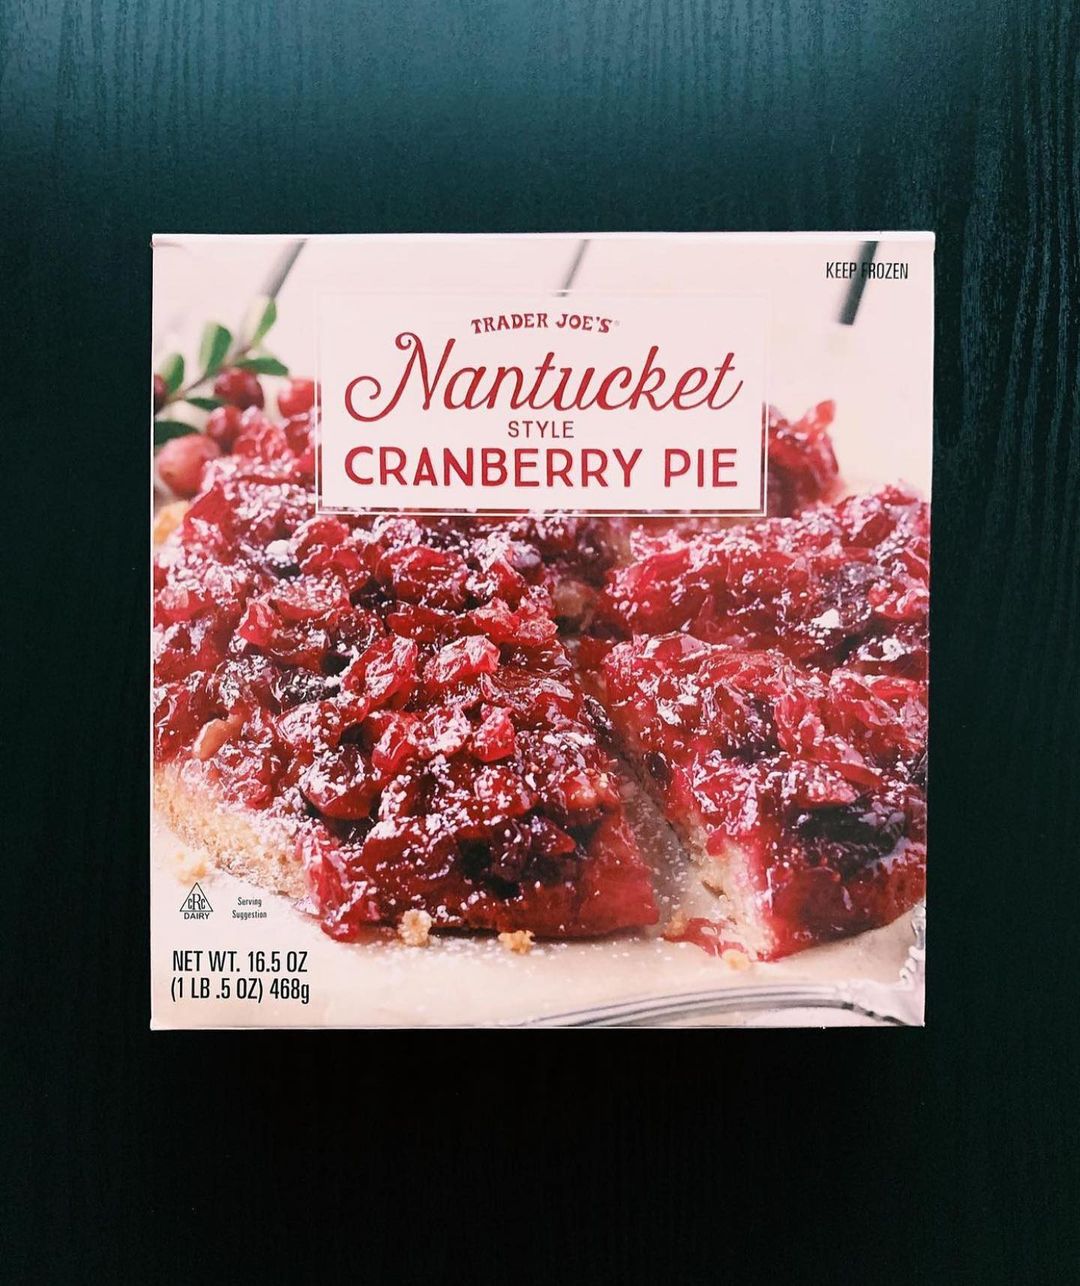 Nantucket Style Cranberry Pie: 7.5/10
...